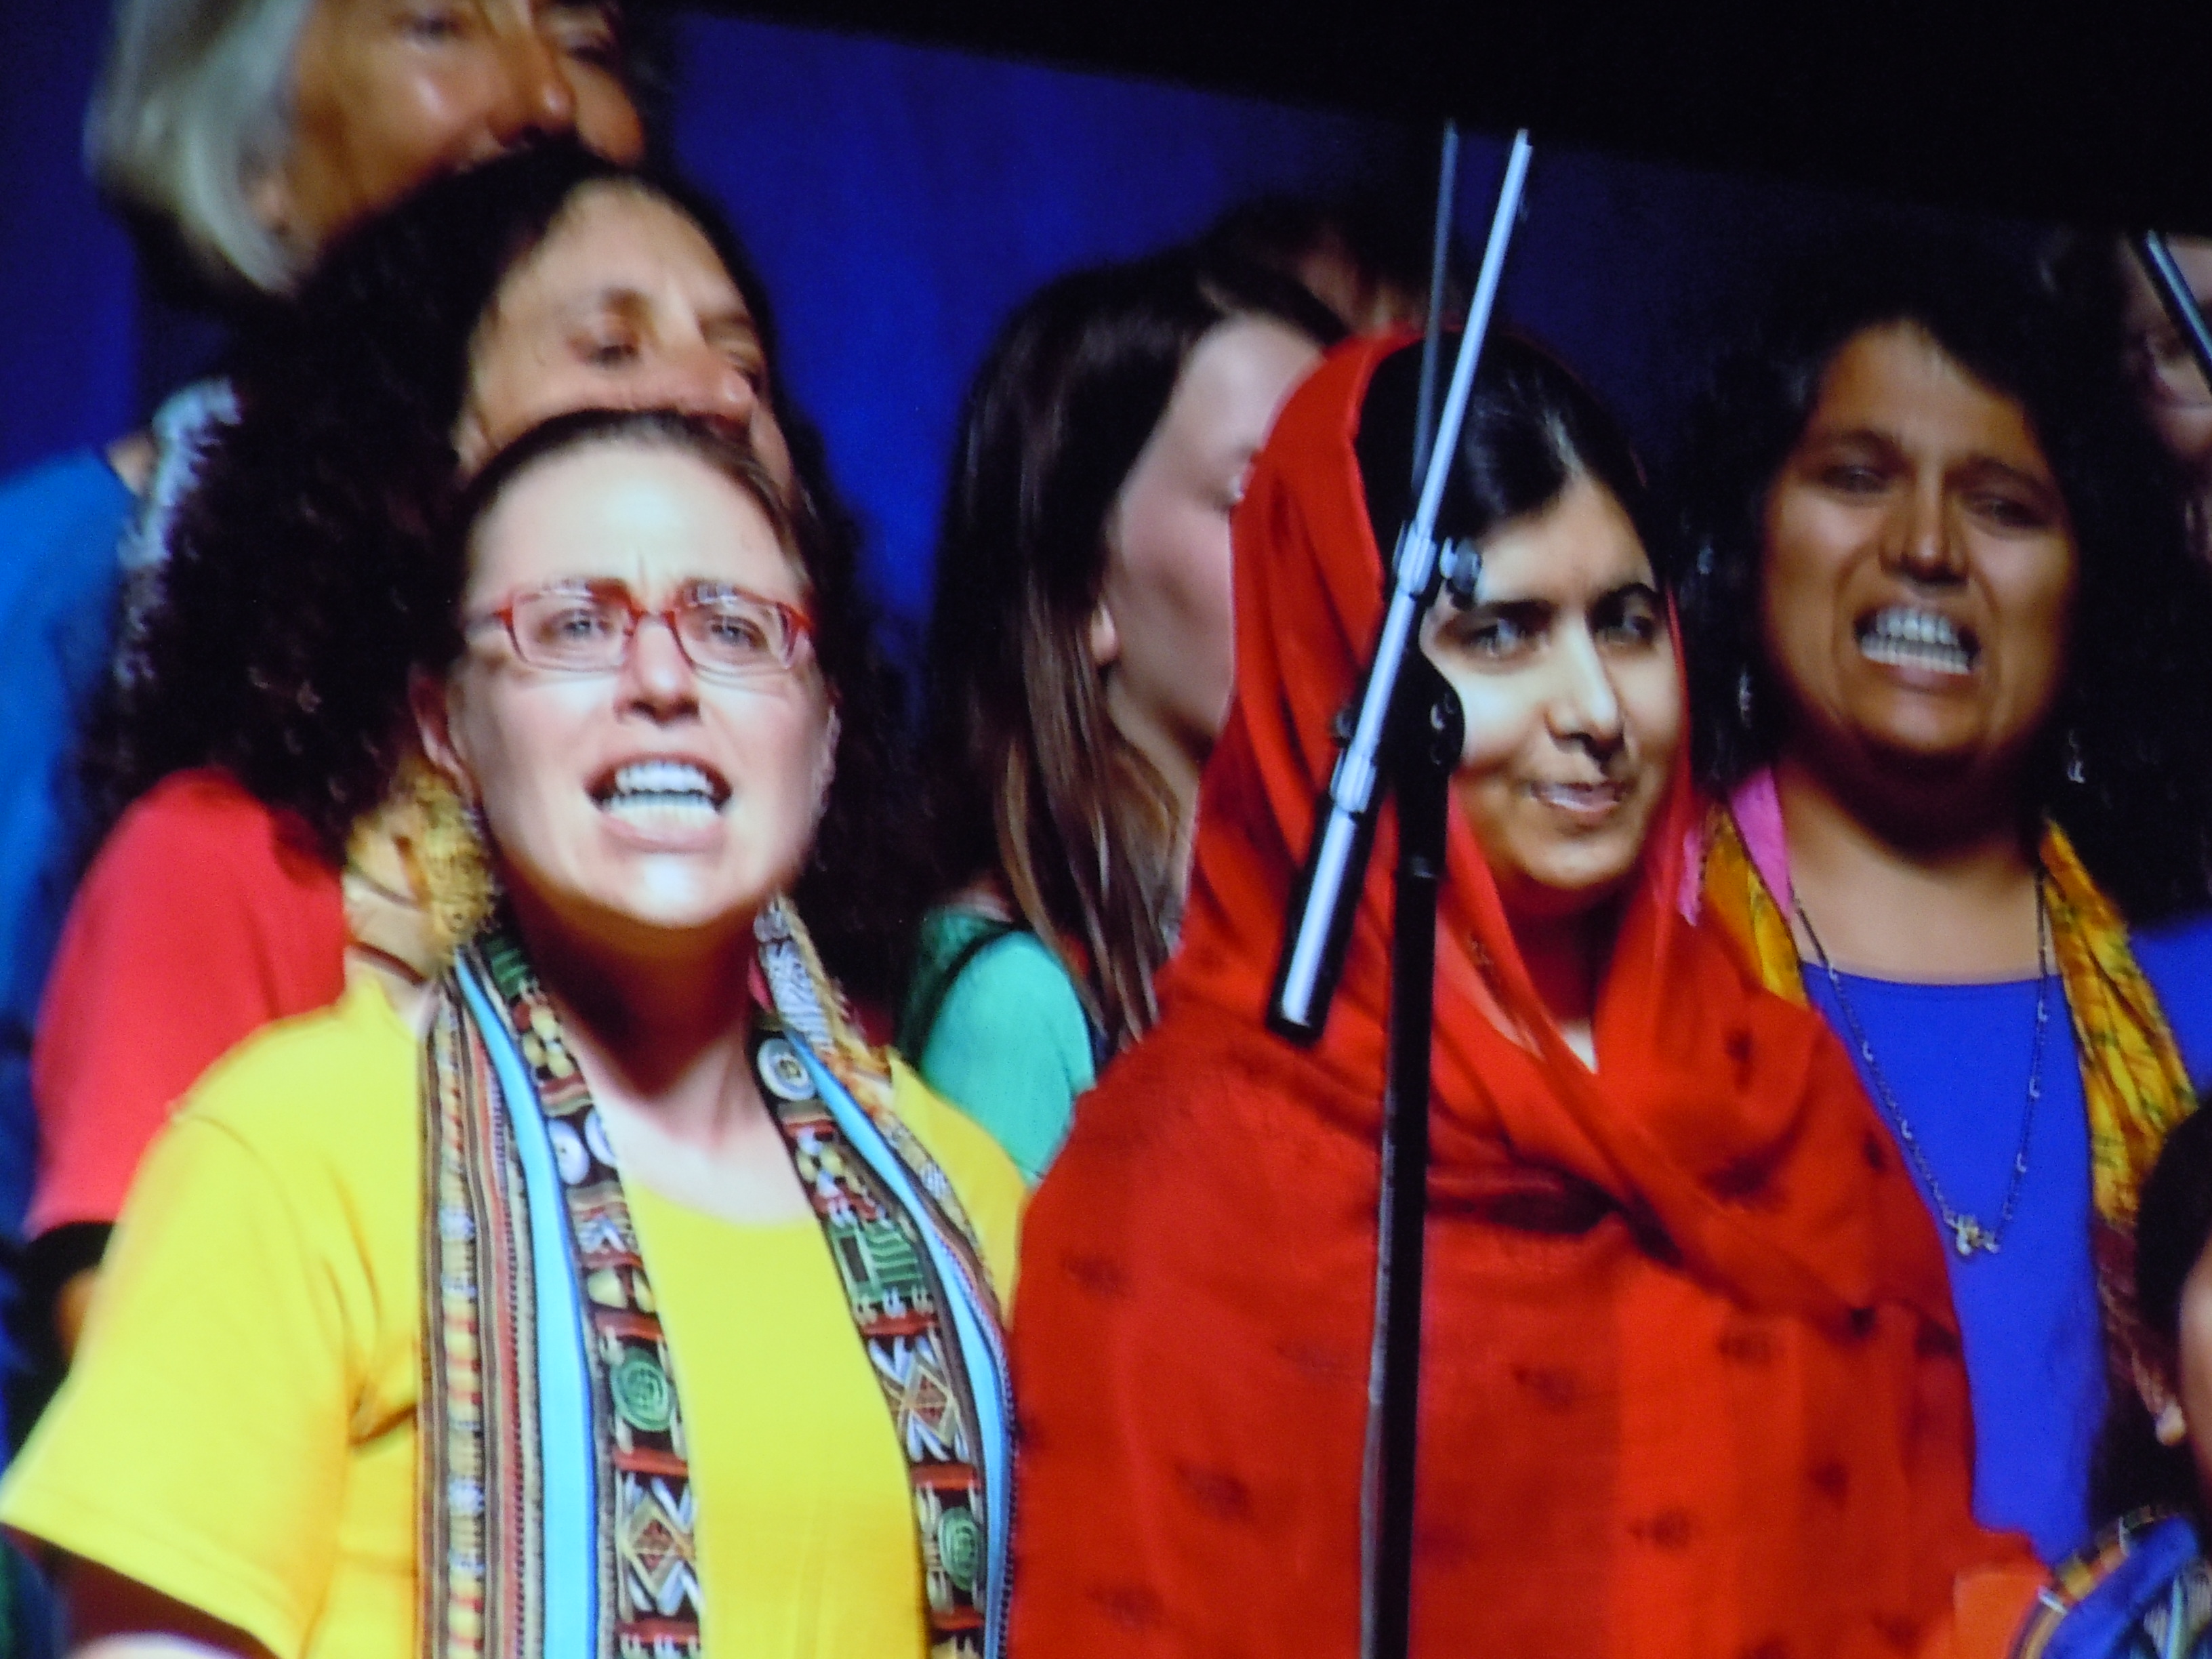 Malala amidst members of Amandla Chorus, serenading her. Photo by Shel Horowitz